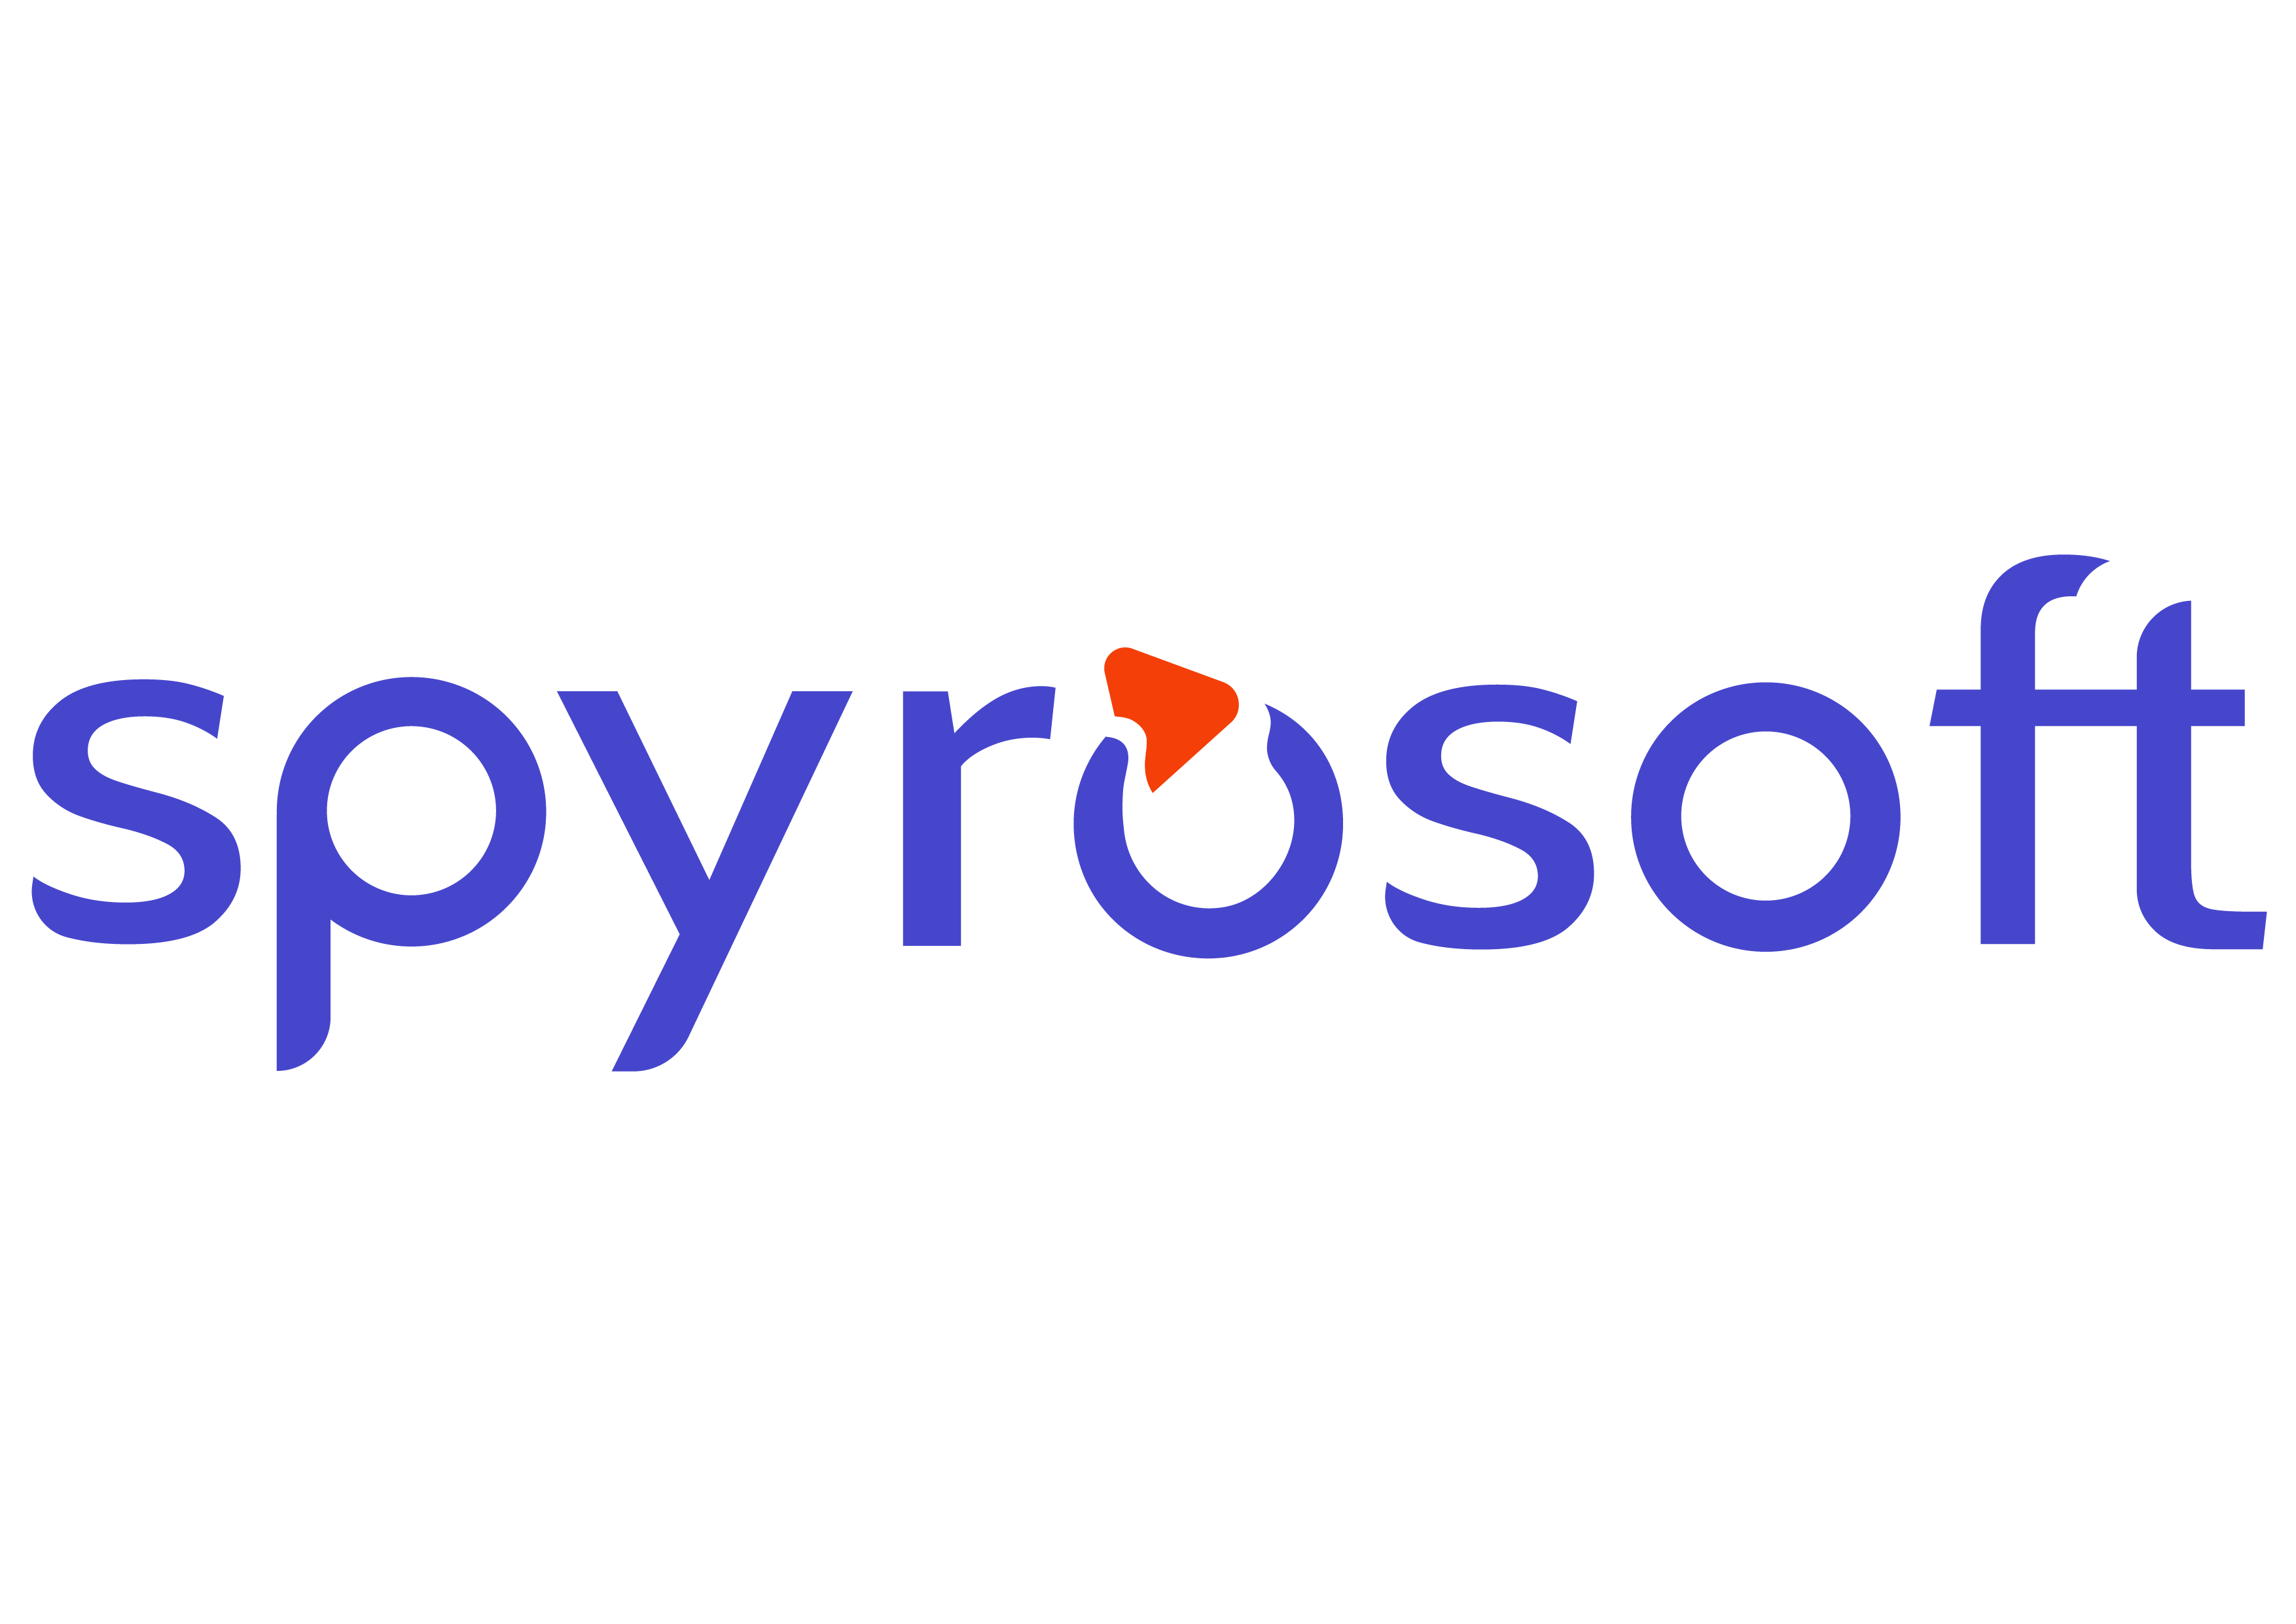 Spyrosoft profile on Qualified.One